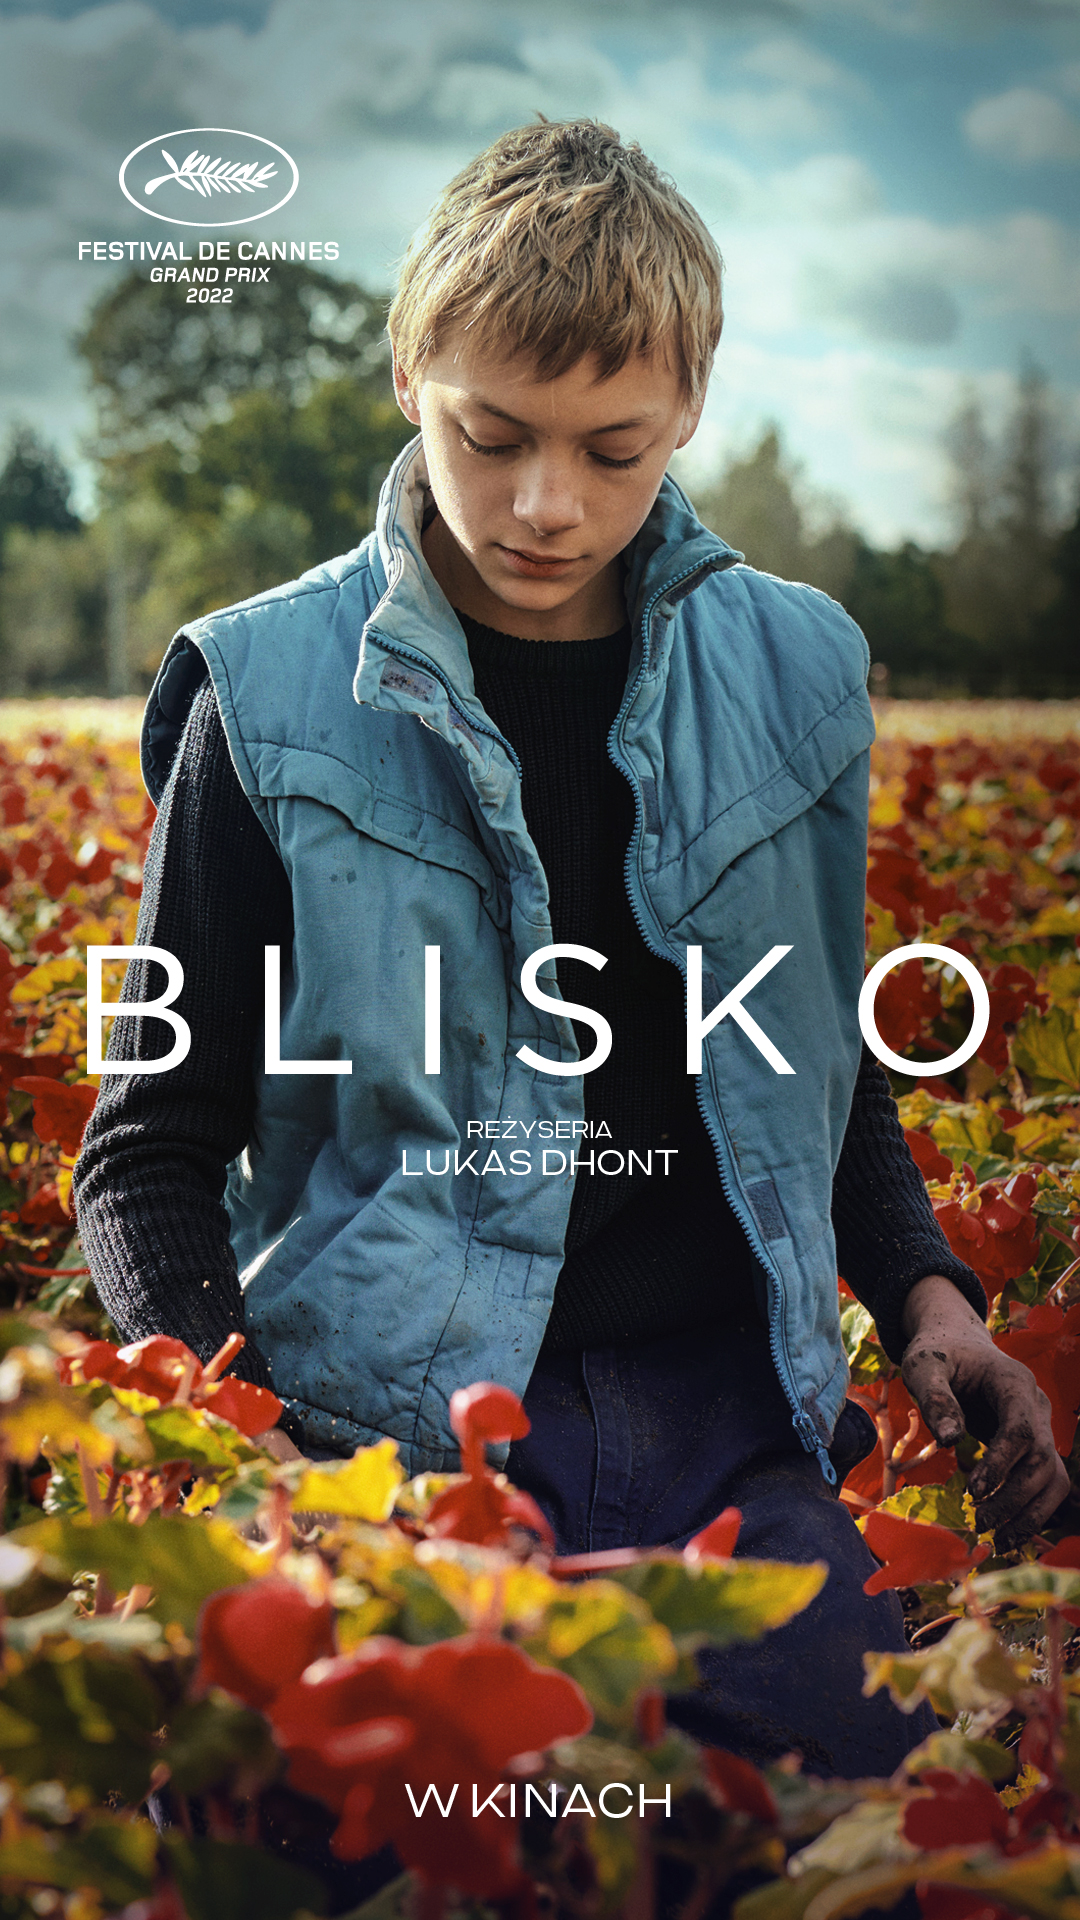 Blisko-Stories-9-16-fotos-1